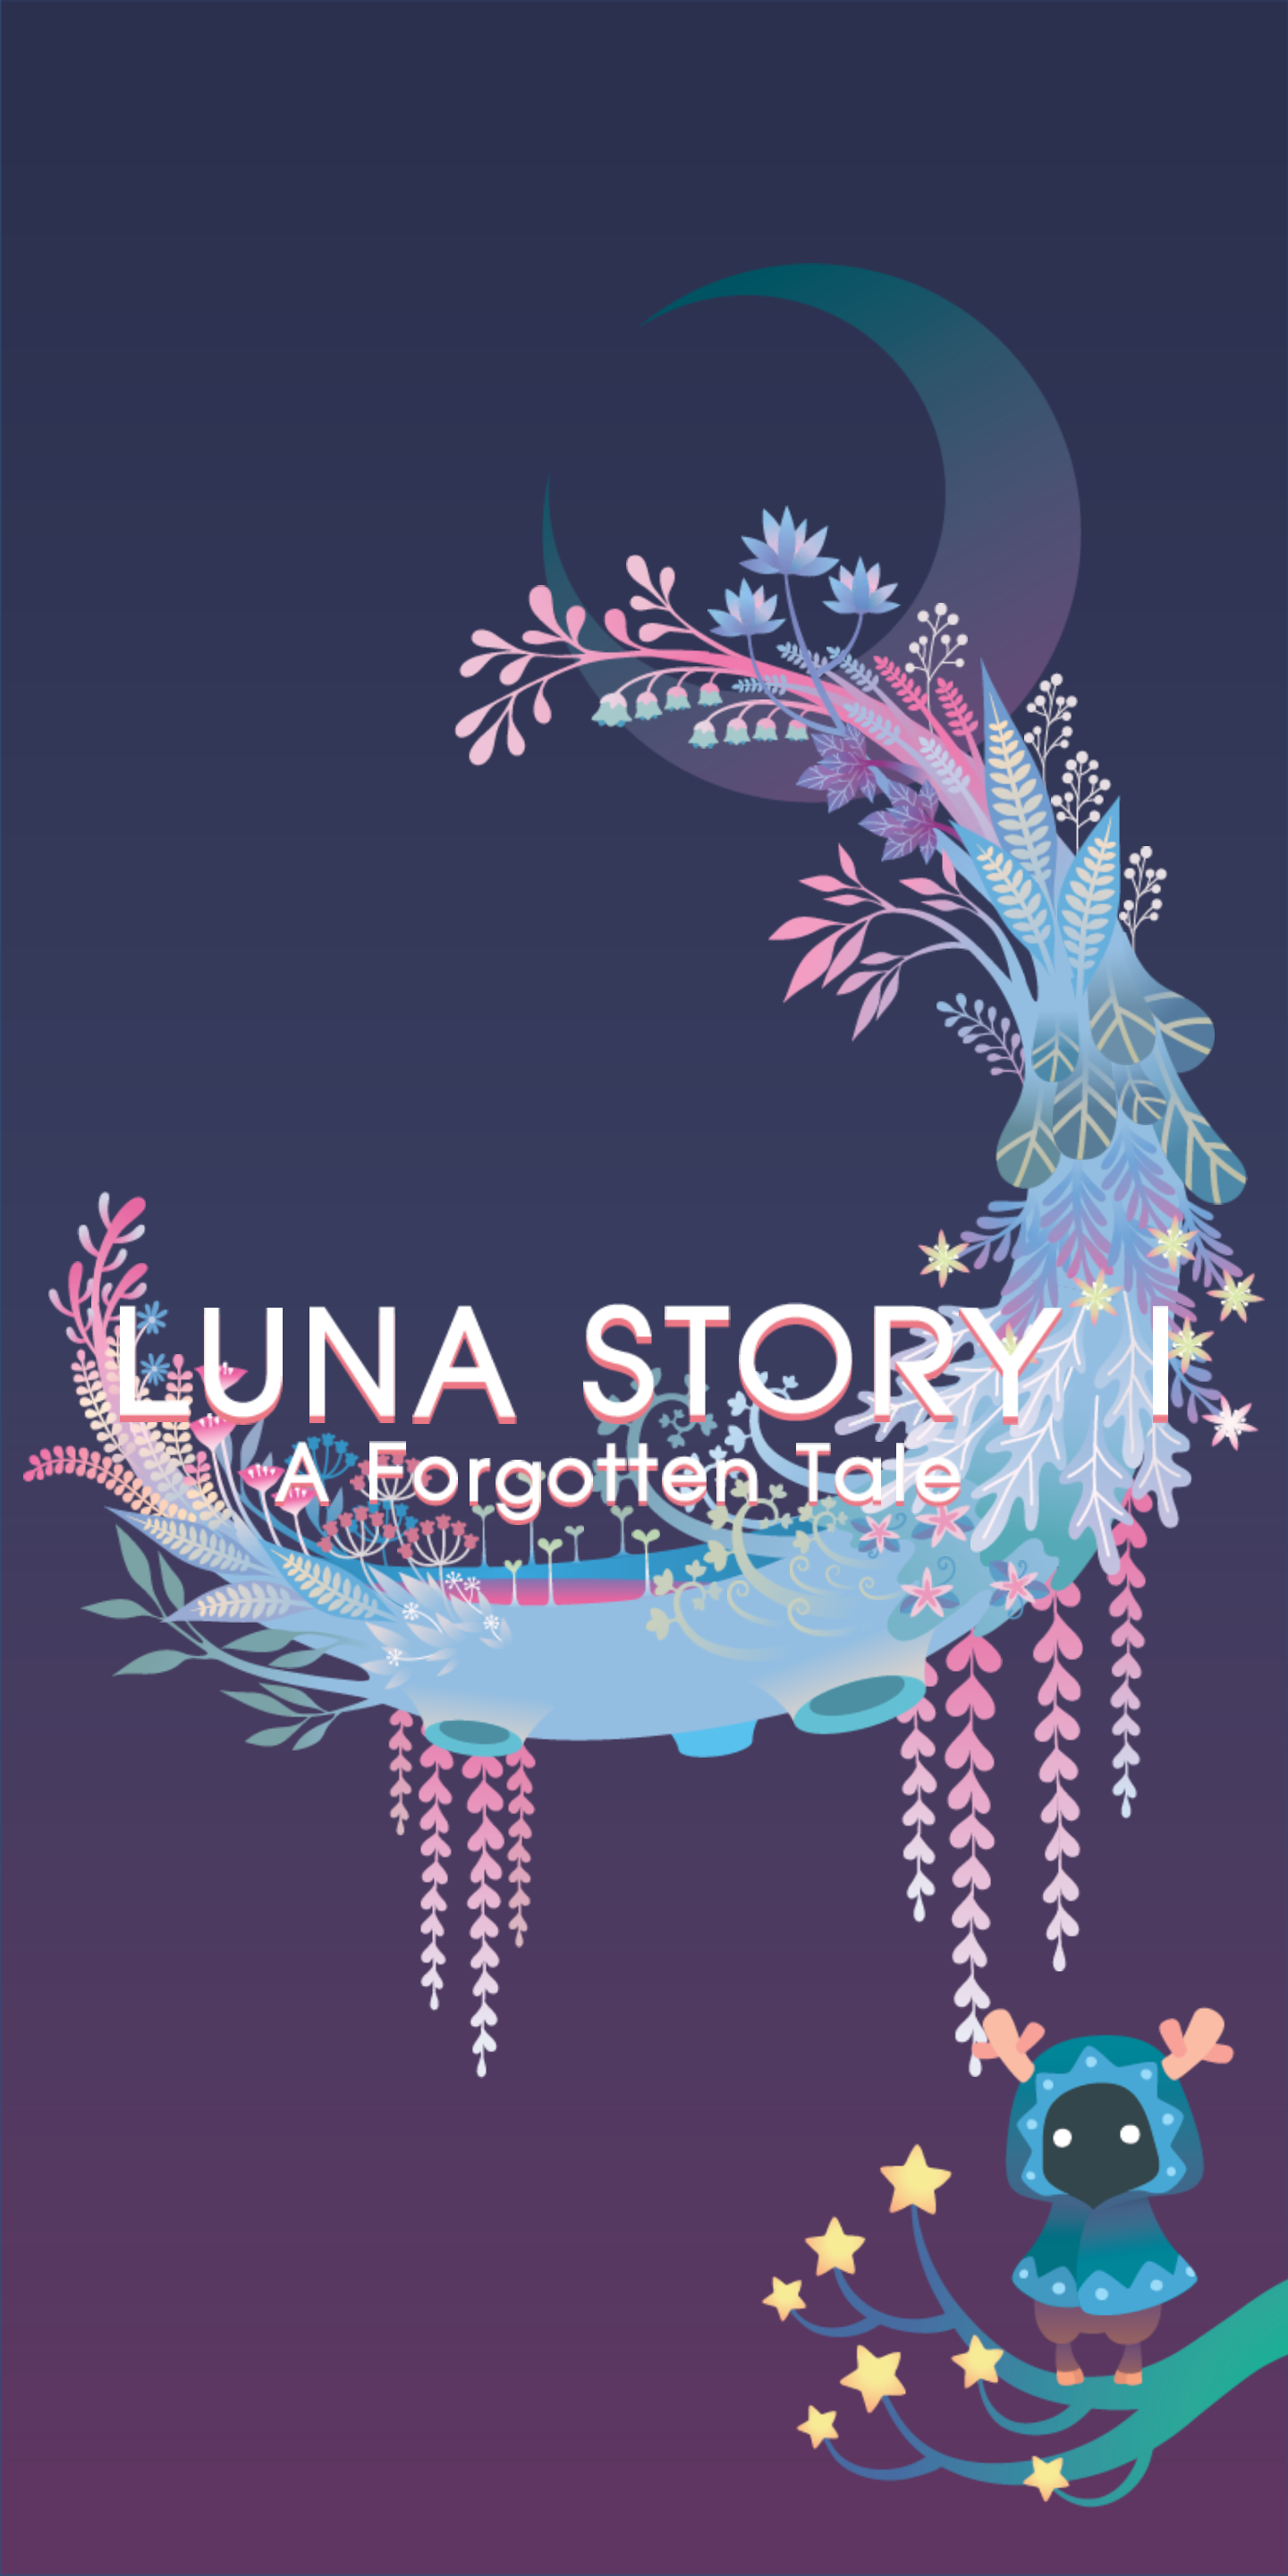 Luna Story - A forgotten tale 游戏截图